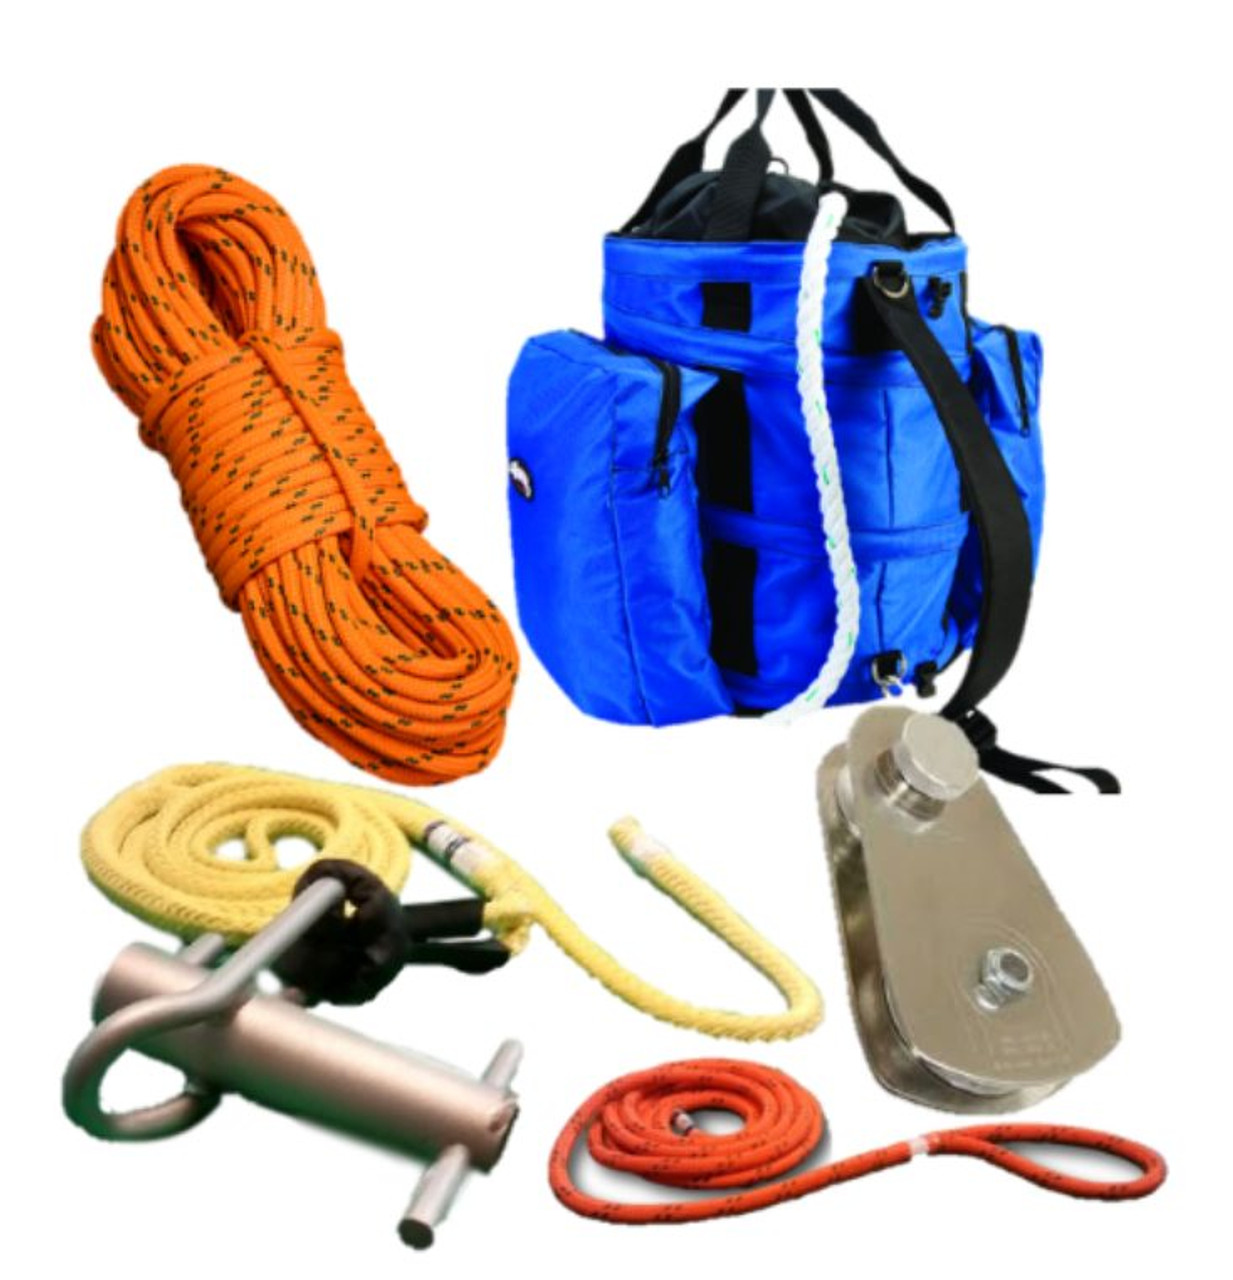 Buy 5/8 Rigging Kit by Gap Arborist Supply, Quality Gear For Arborist